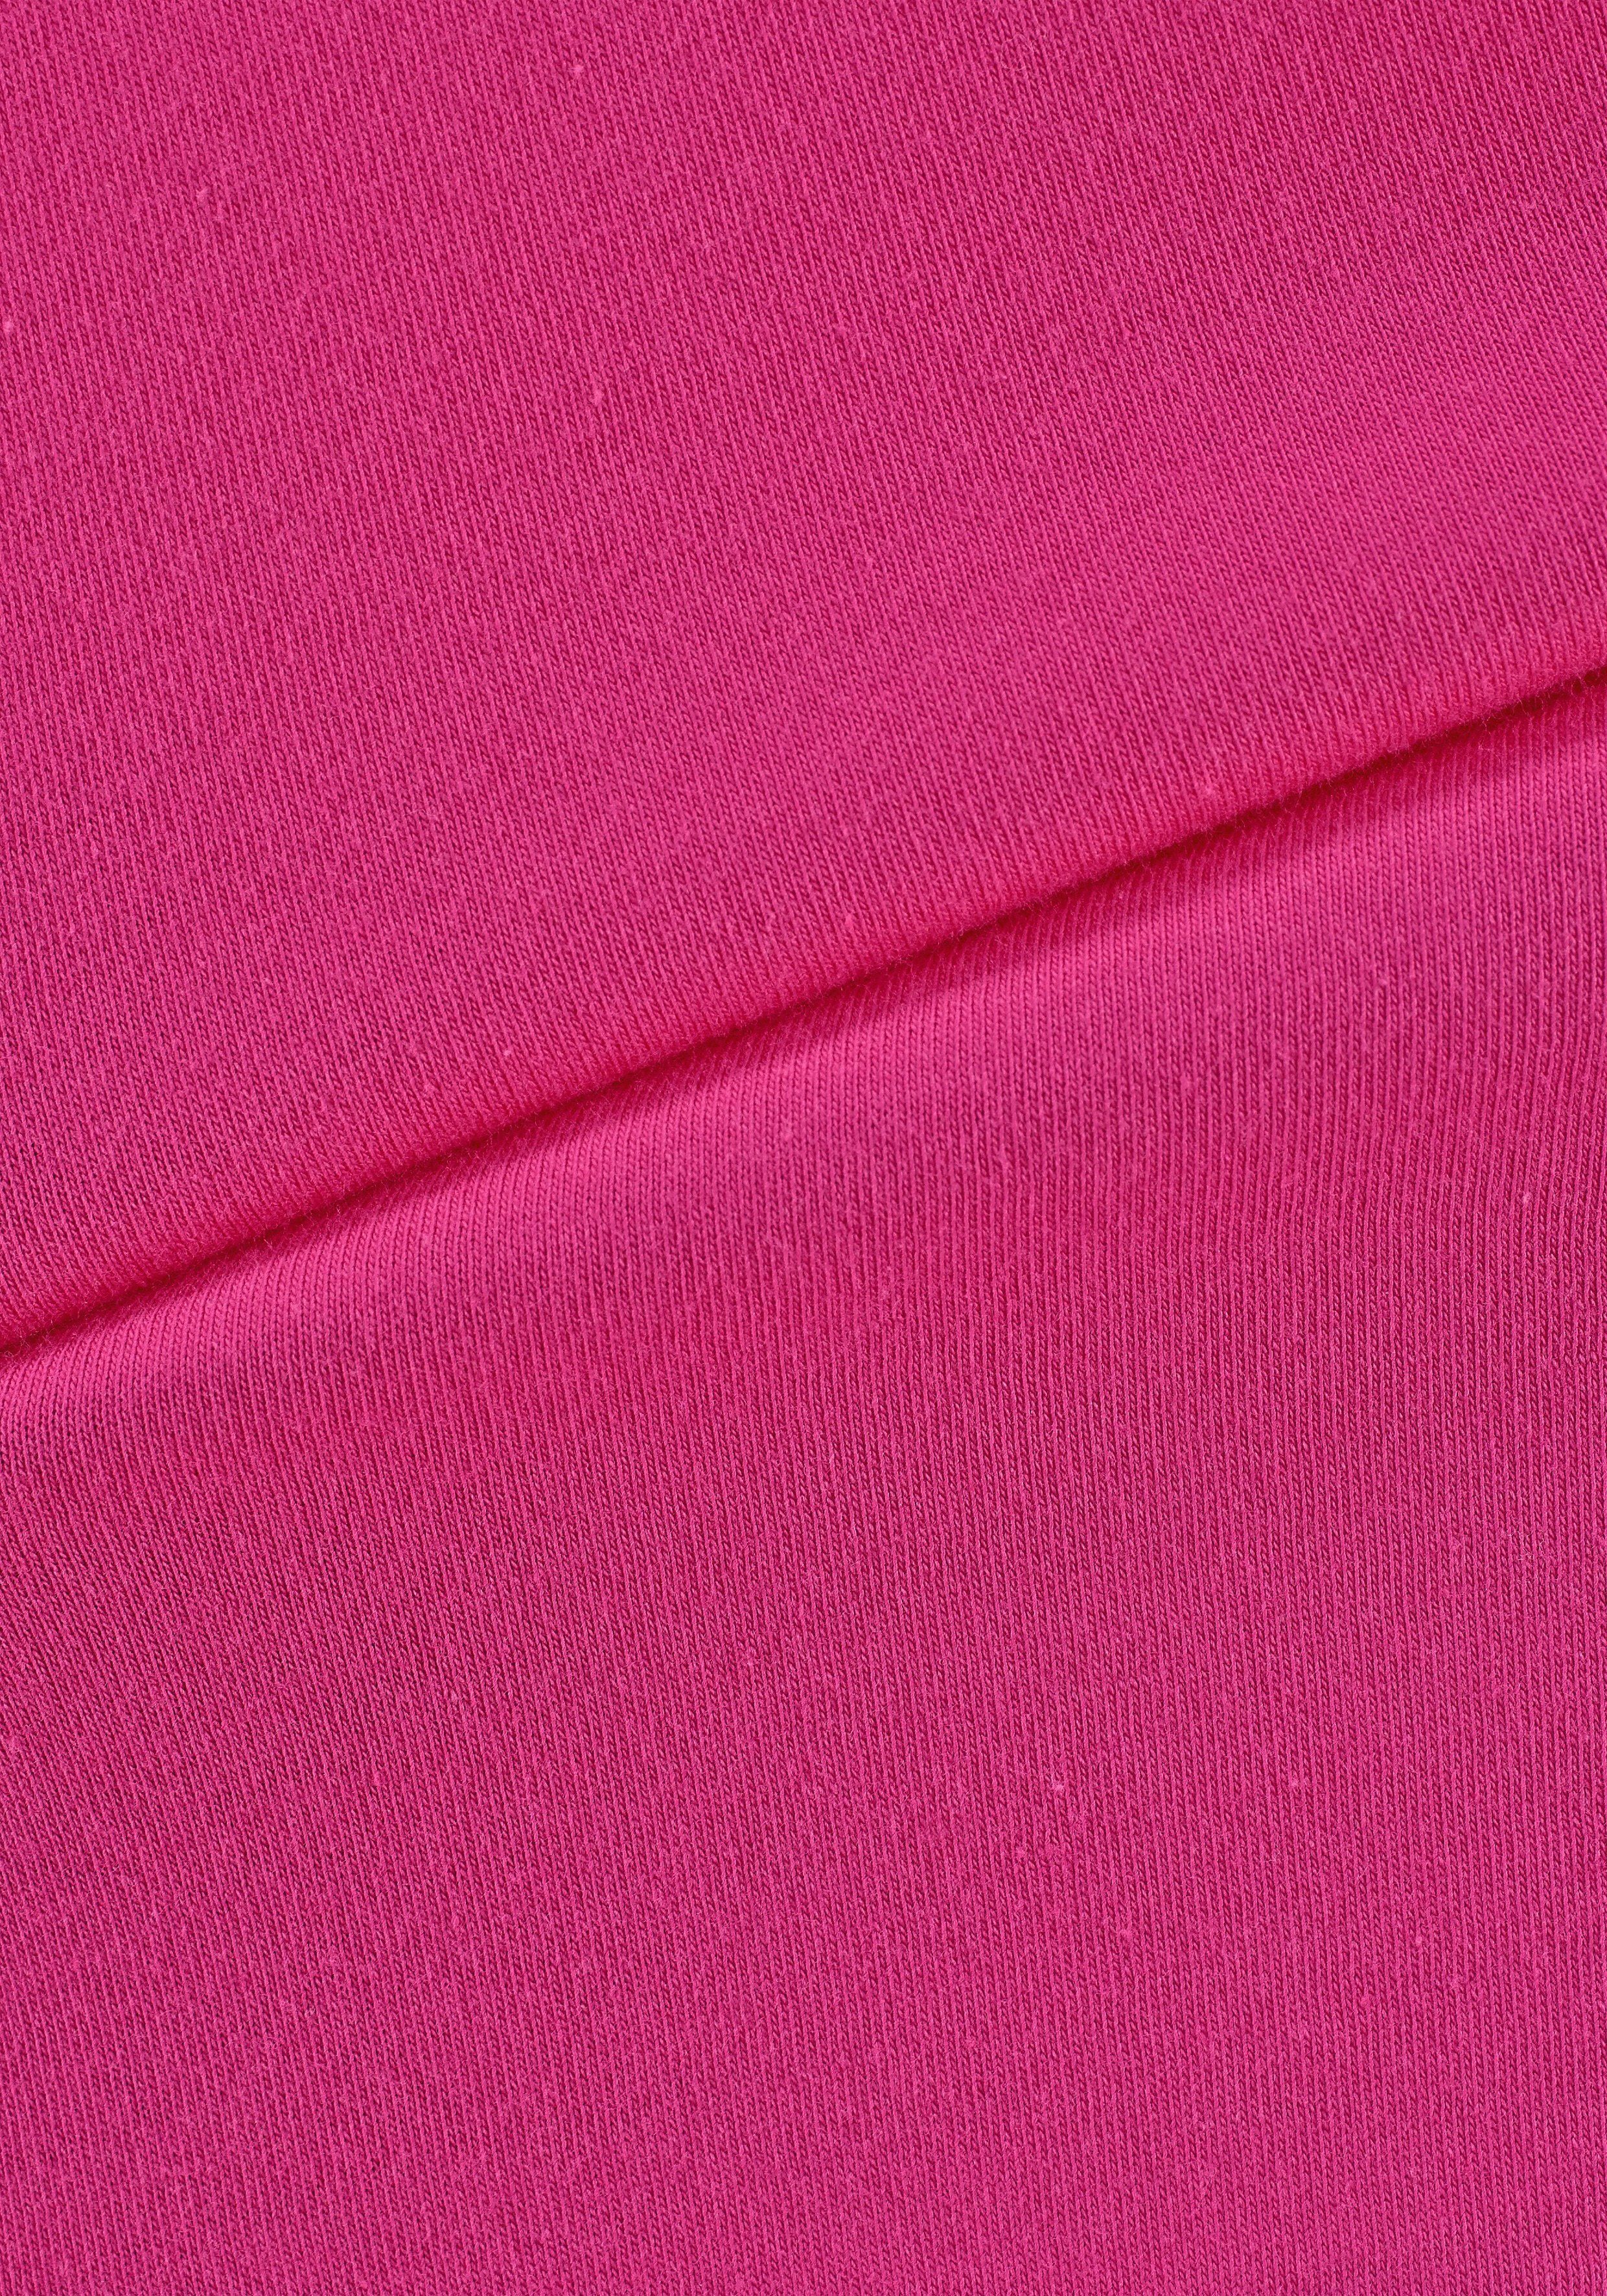 mit (2er-Pack) Dreams Sleepshirt Vivance pink, Spitzenoptik Print in schwarz